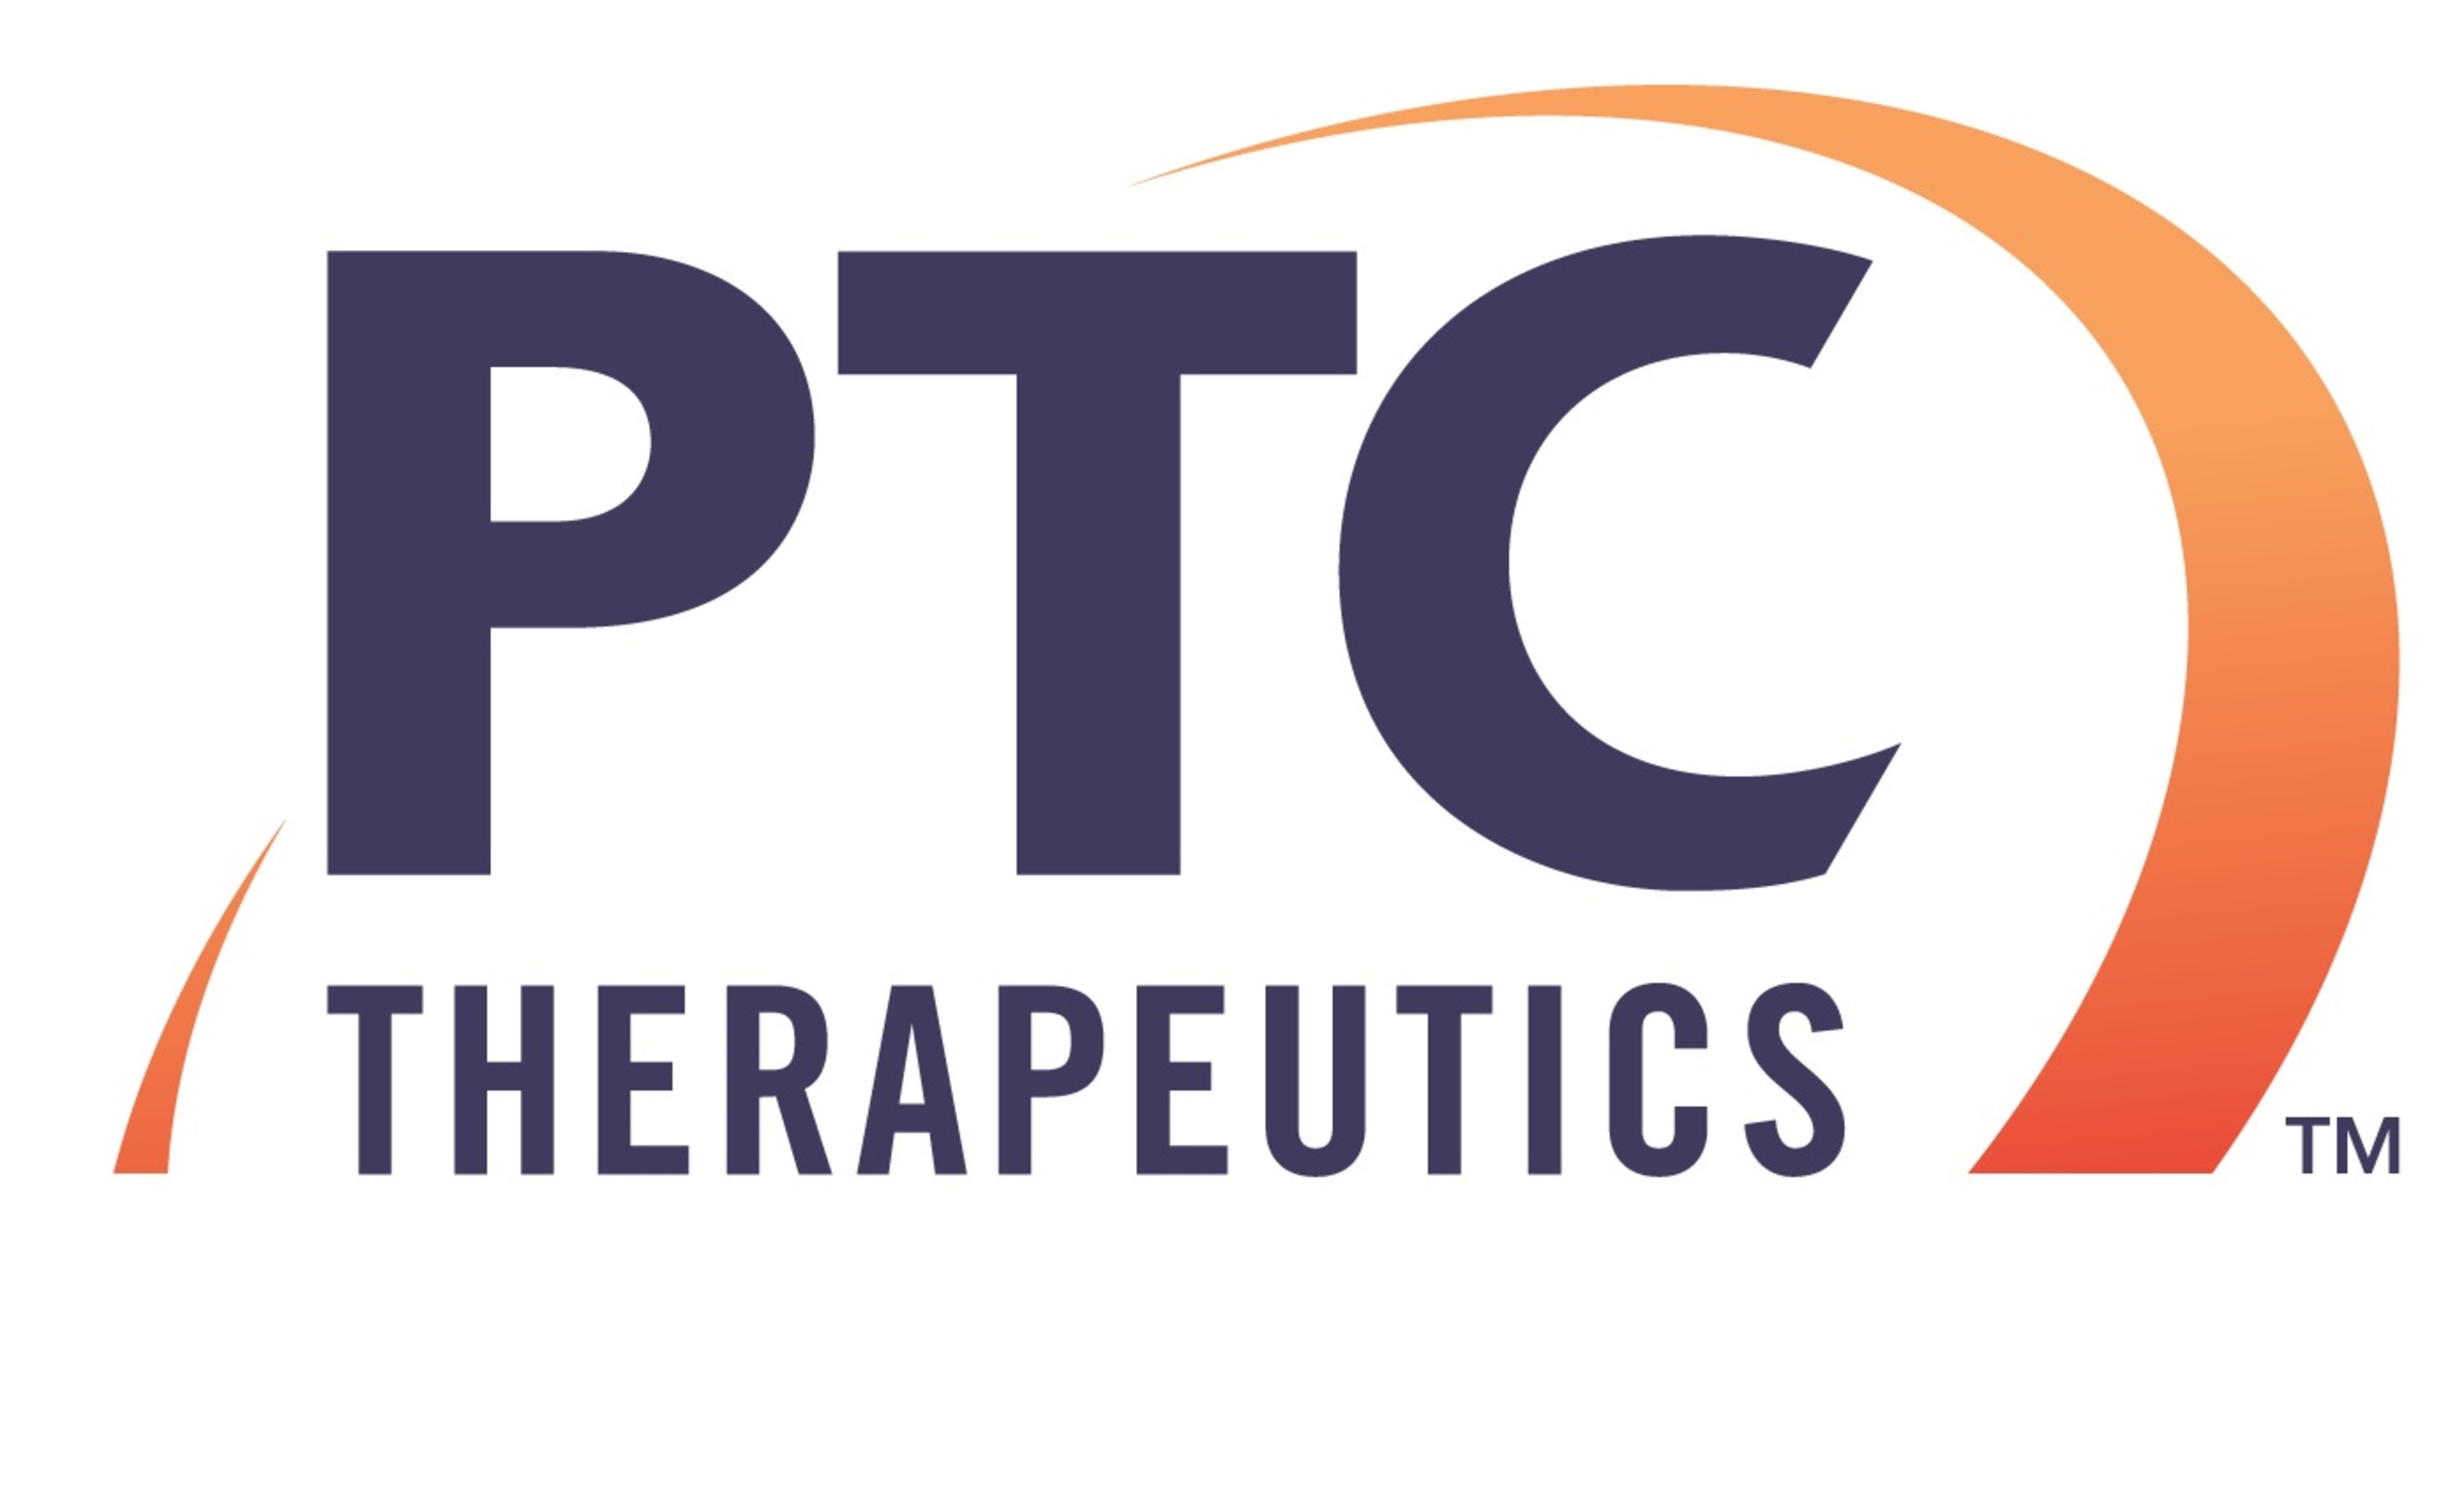 PTC Therapeutics logo. (PRNewsFoto/PTC Therapeutics, Inc.) (PRNewsFoto/)